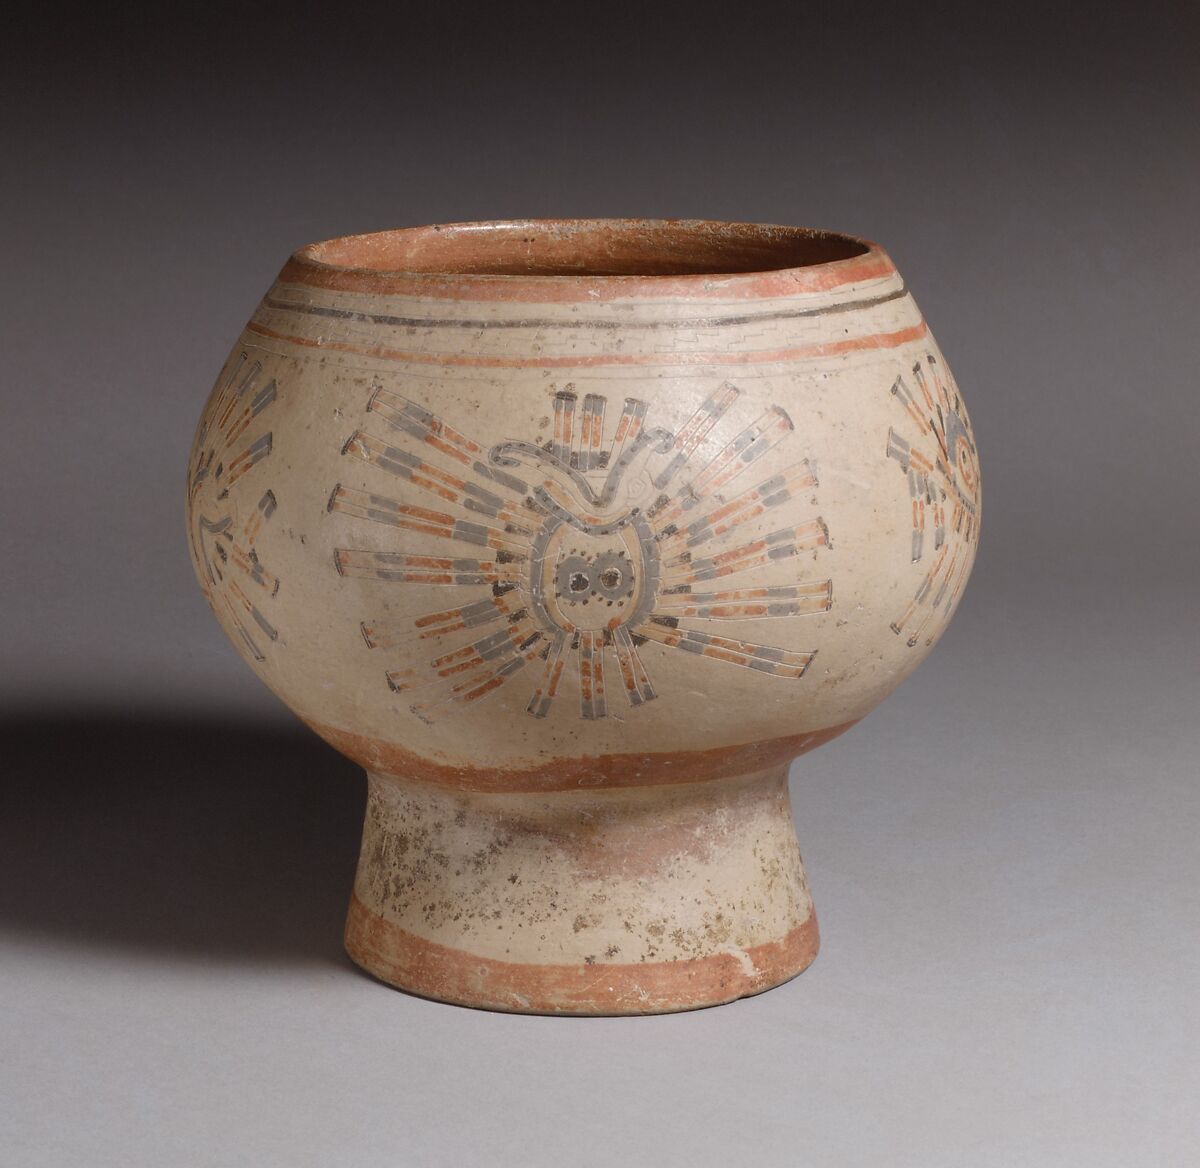 Pedestal Bowl, Ceramic, Guanacaste-Nicoya 